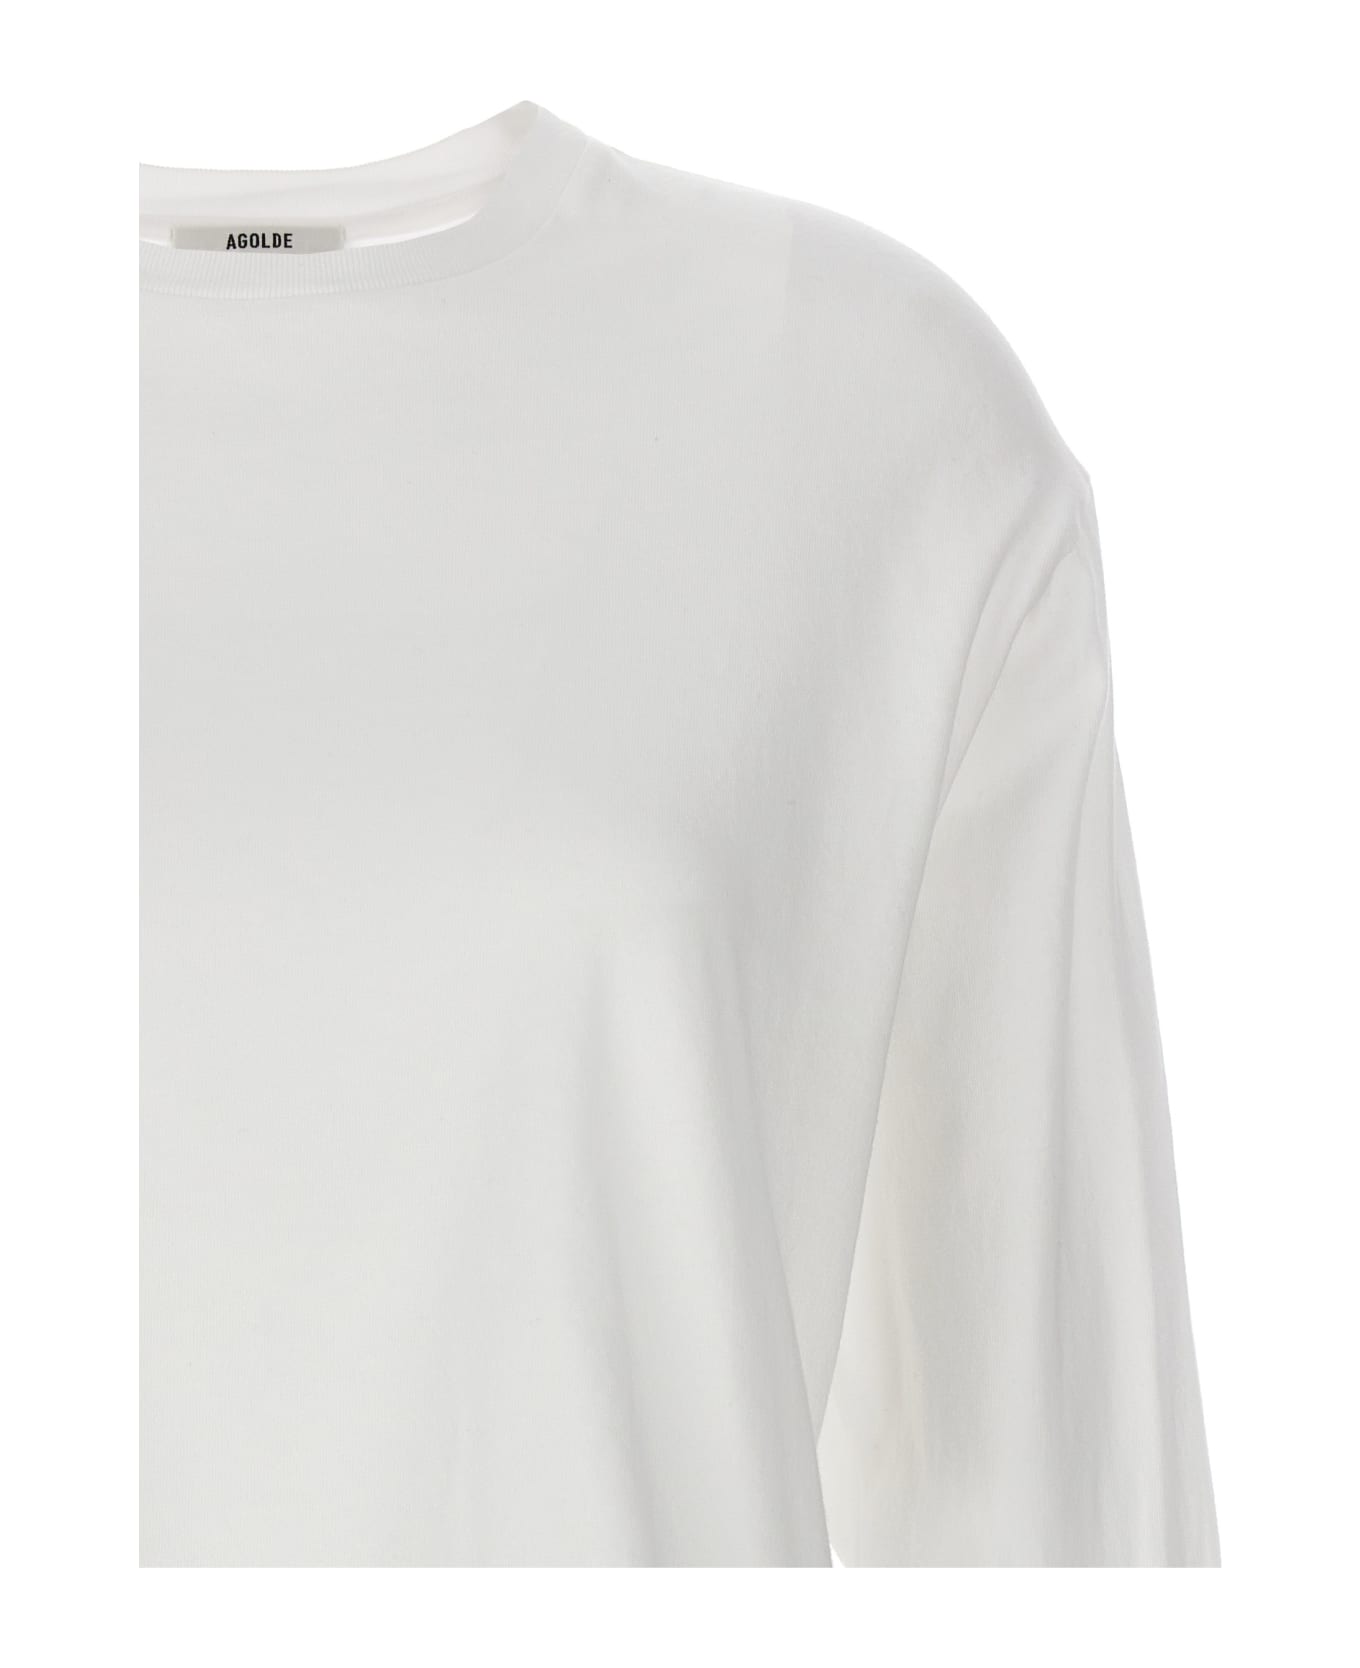 AGOLDE 'mason' Cropped T-shirt - White